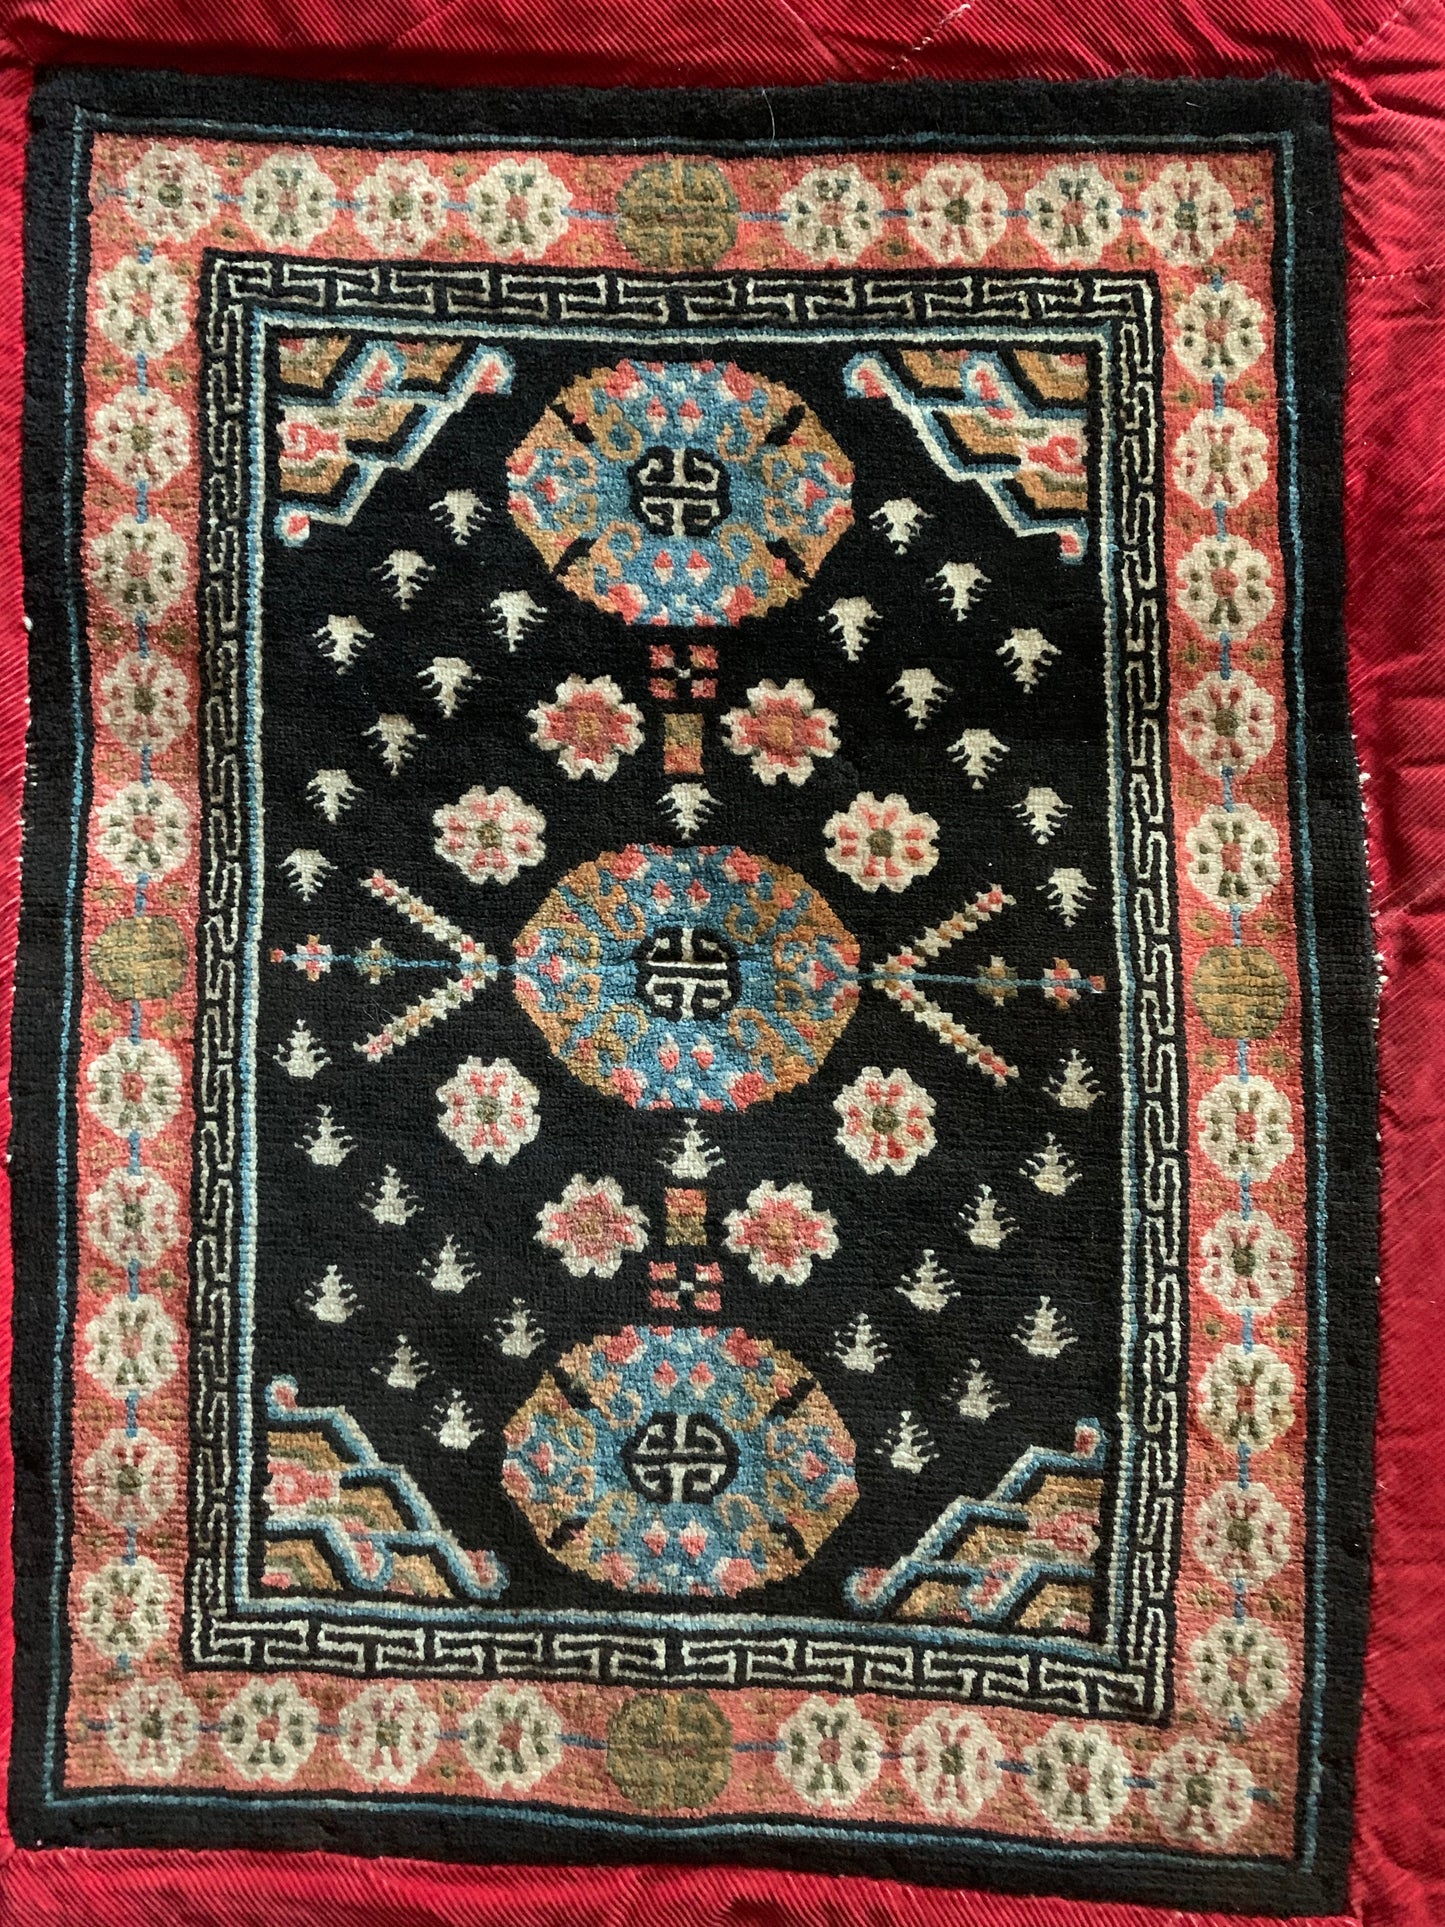 An antique Tibetan horse blanket carpet and saddle topper